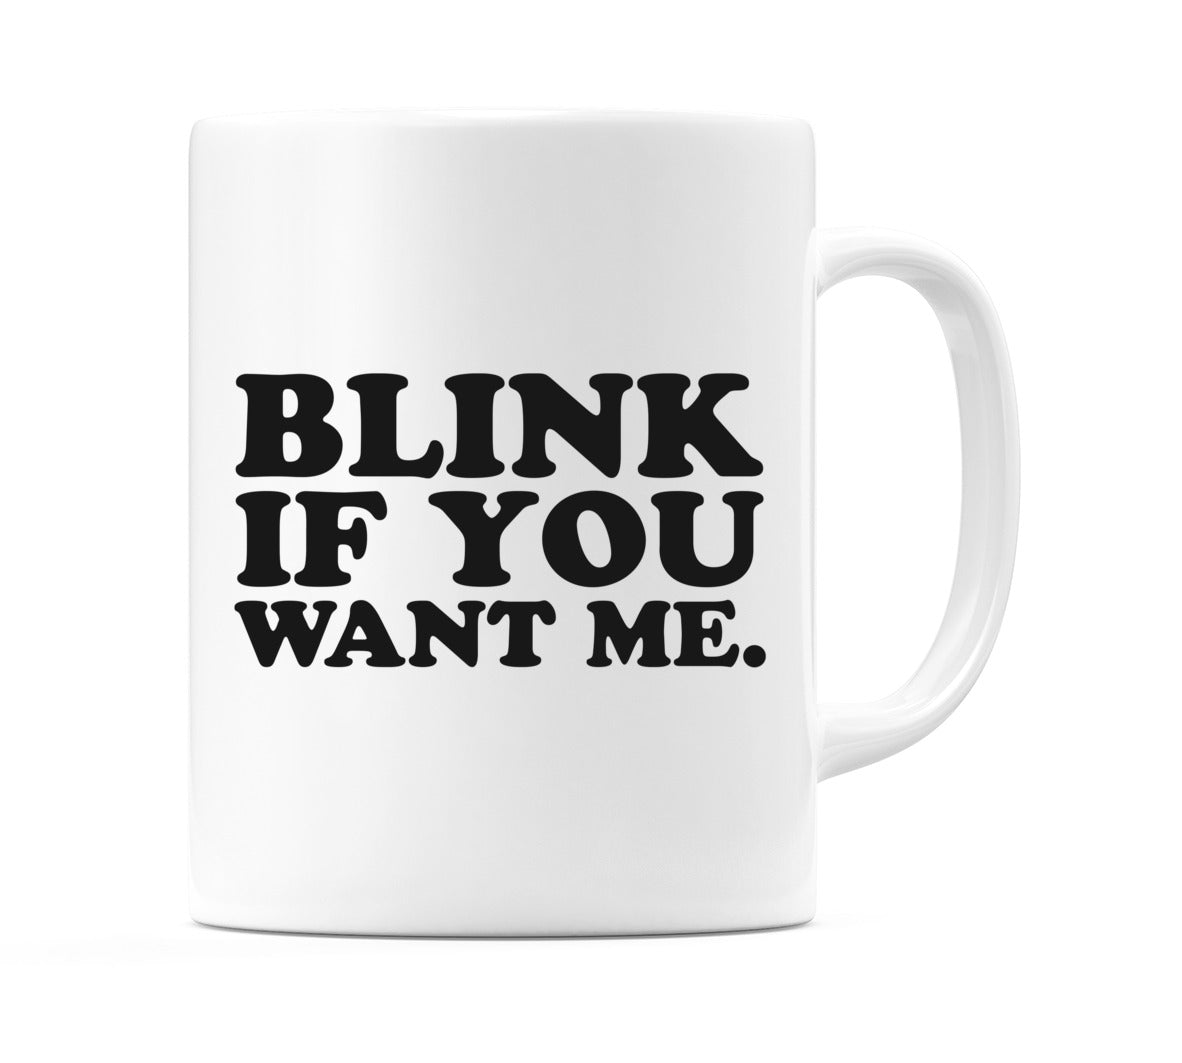 Blink If You Want Me. Mug